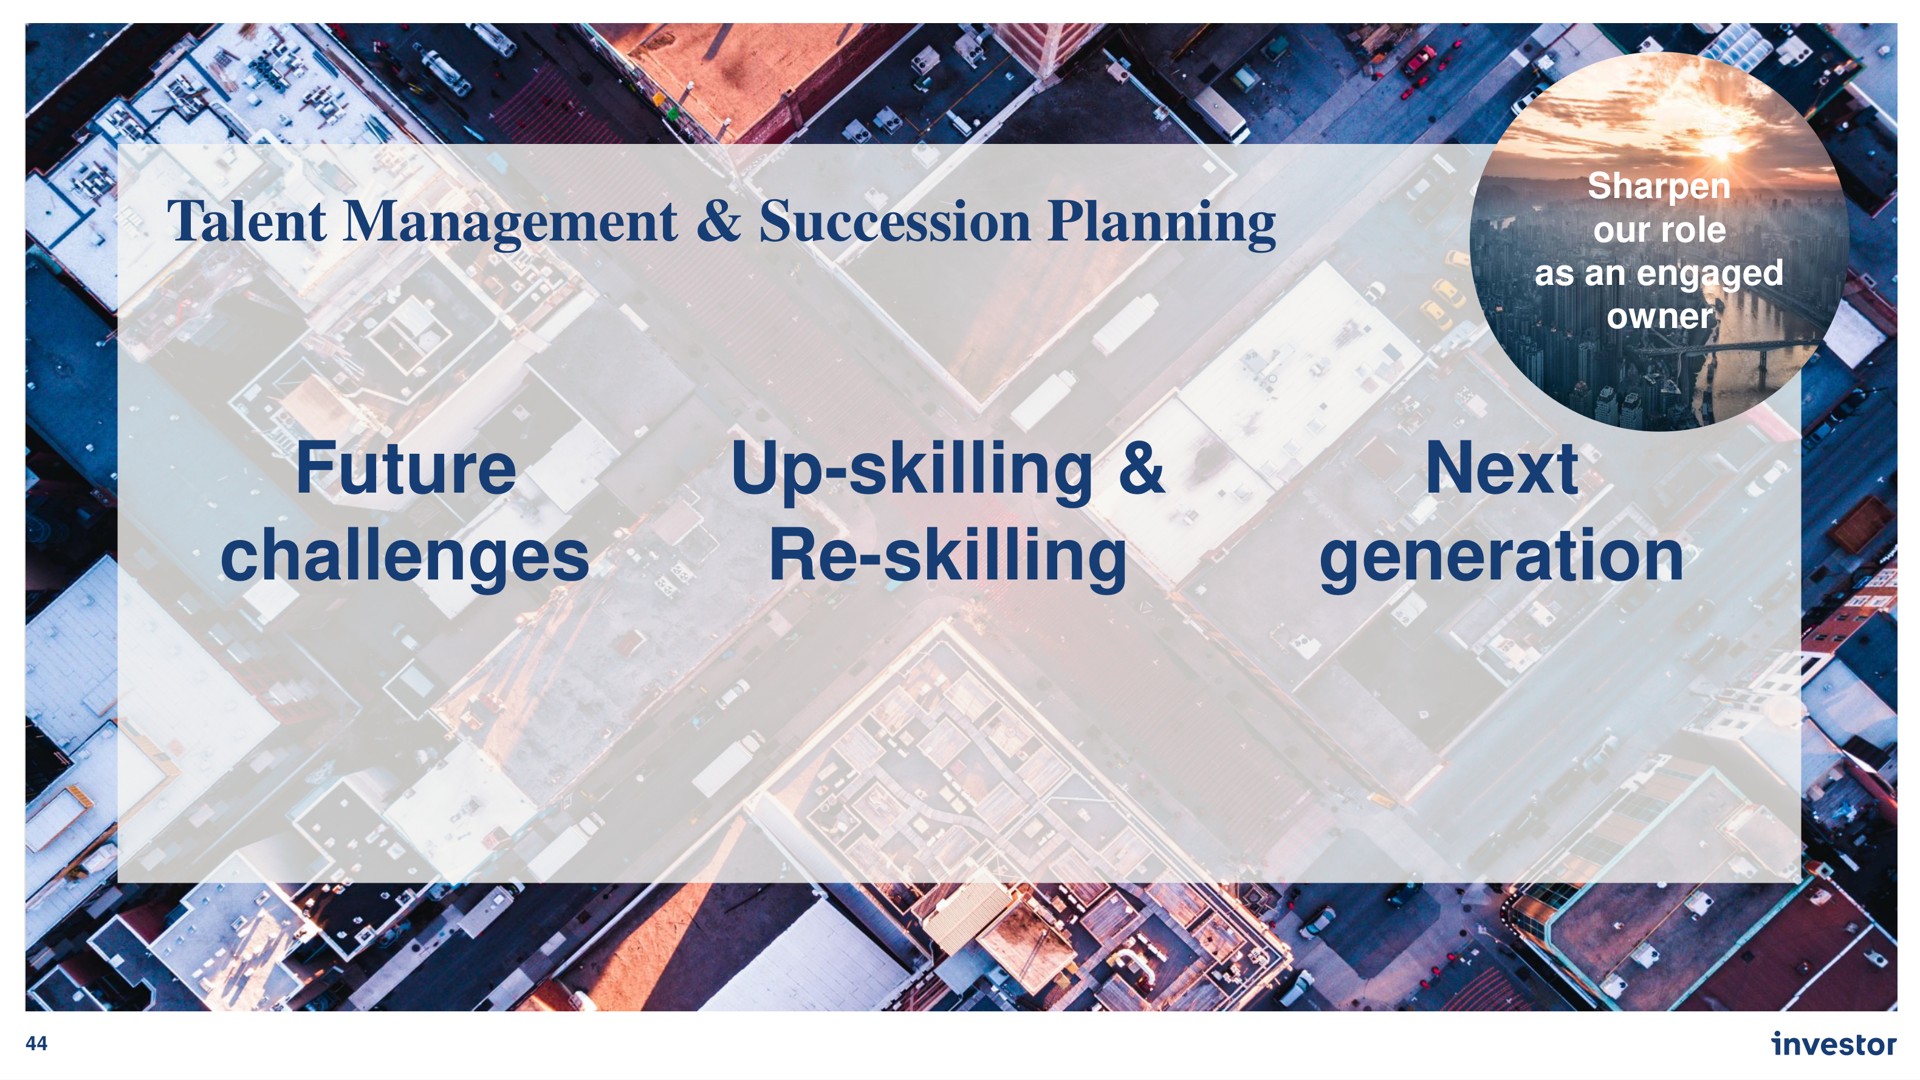 talent management succession planning future challenges up skilling skilling next generation | Investor AB